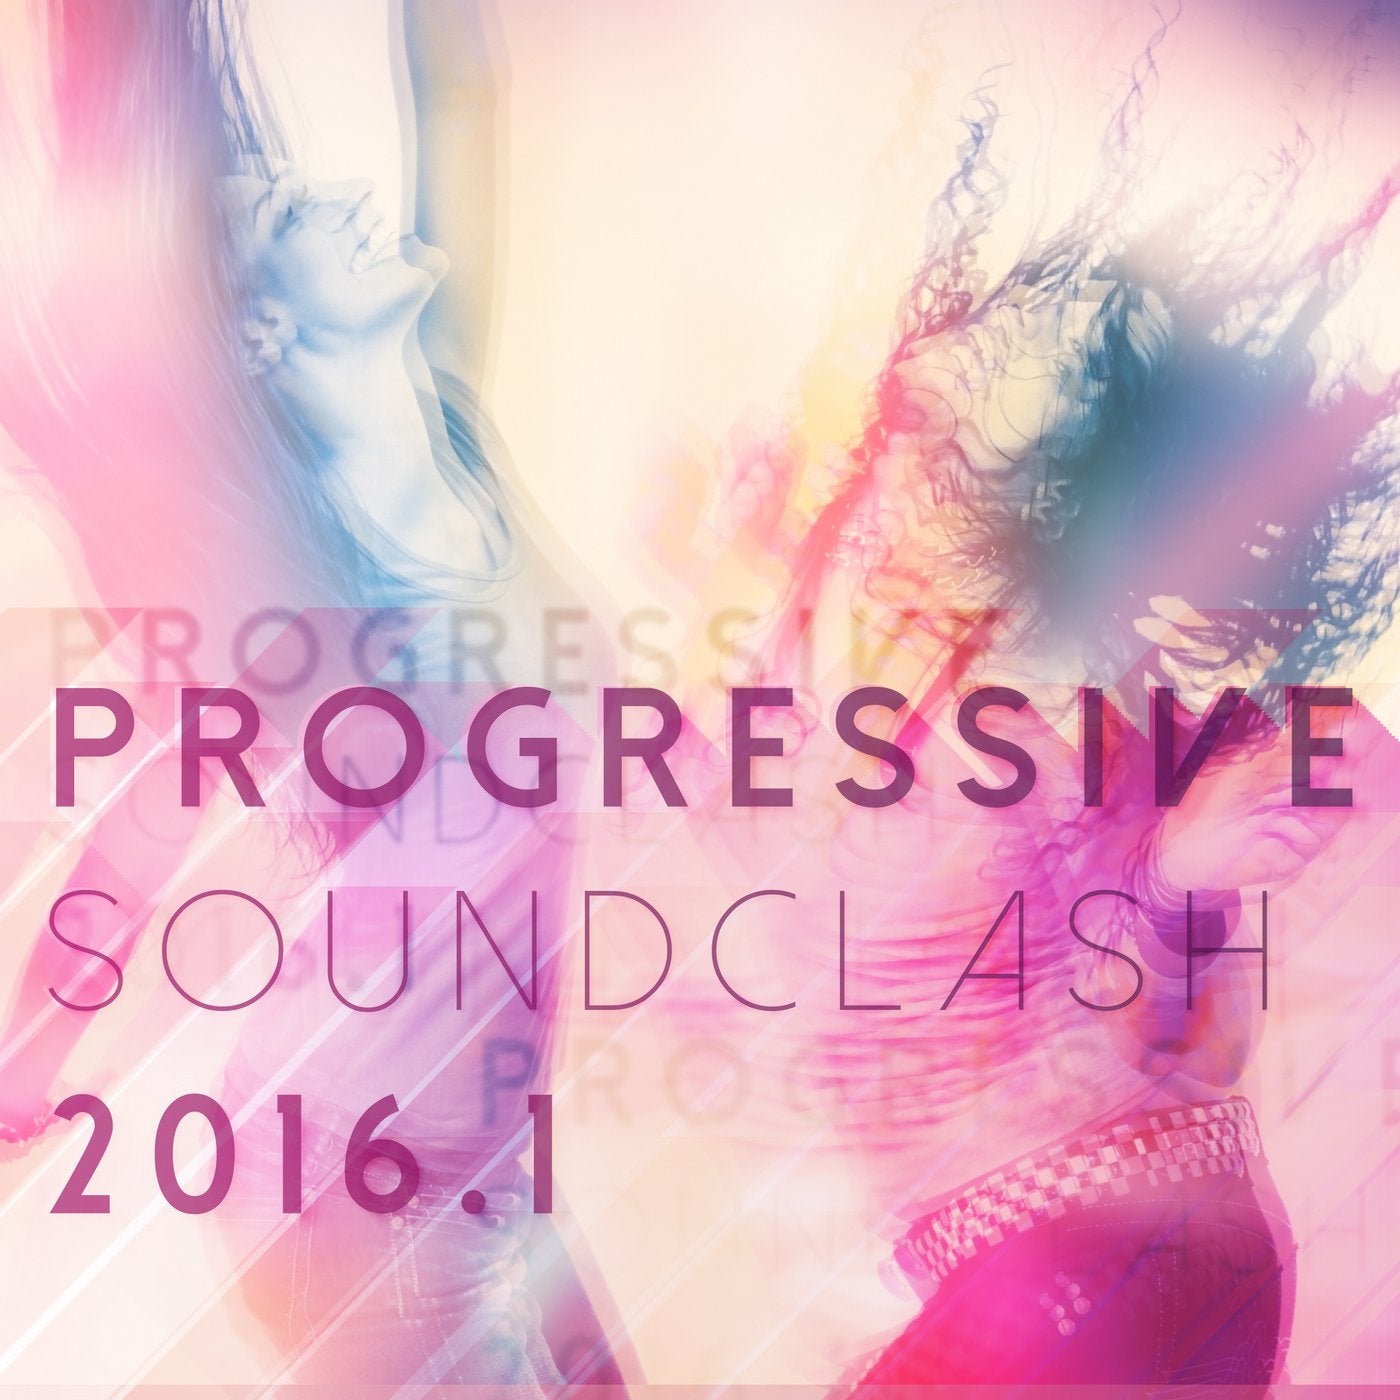 Progressive Soundclash 2016.1